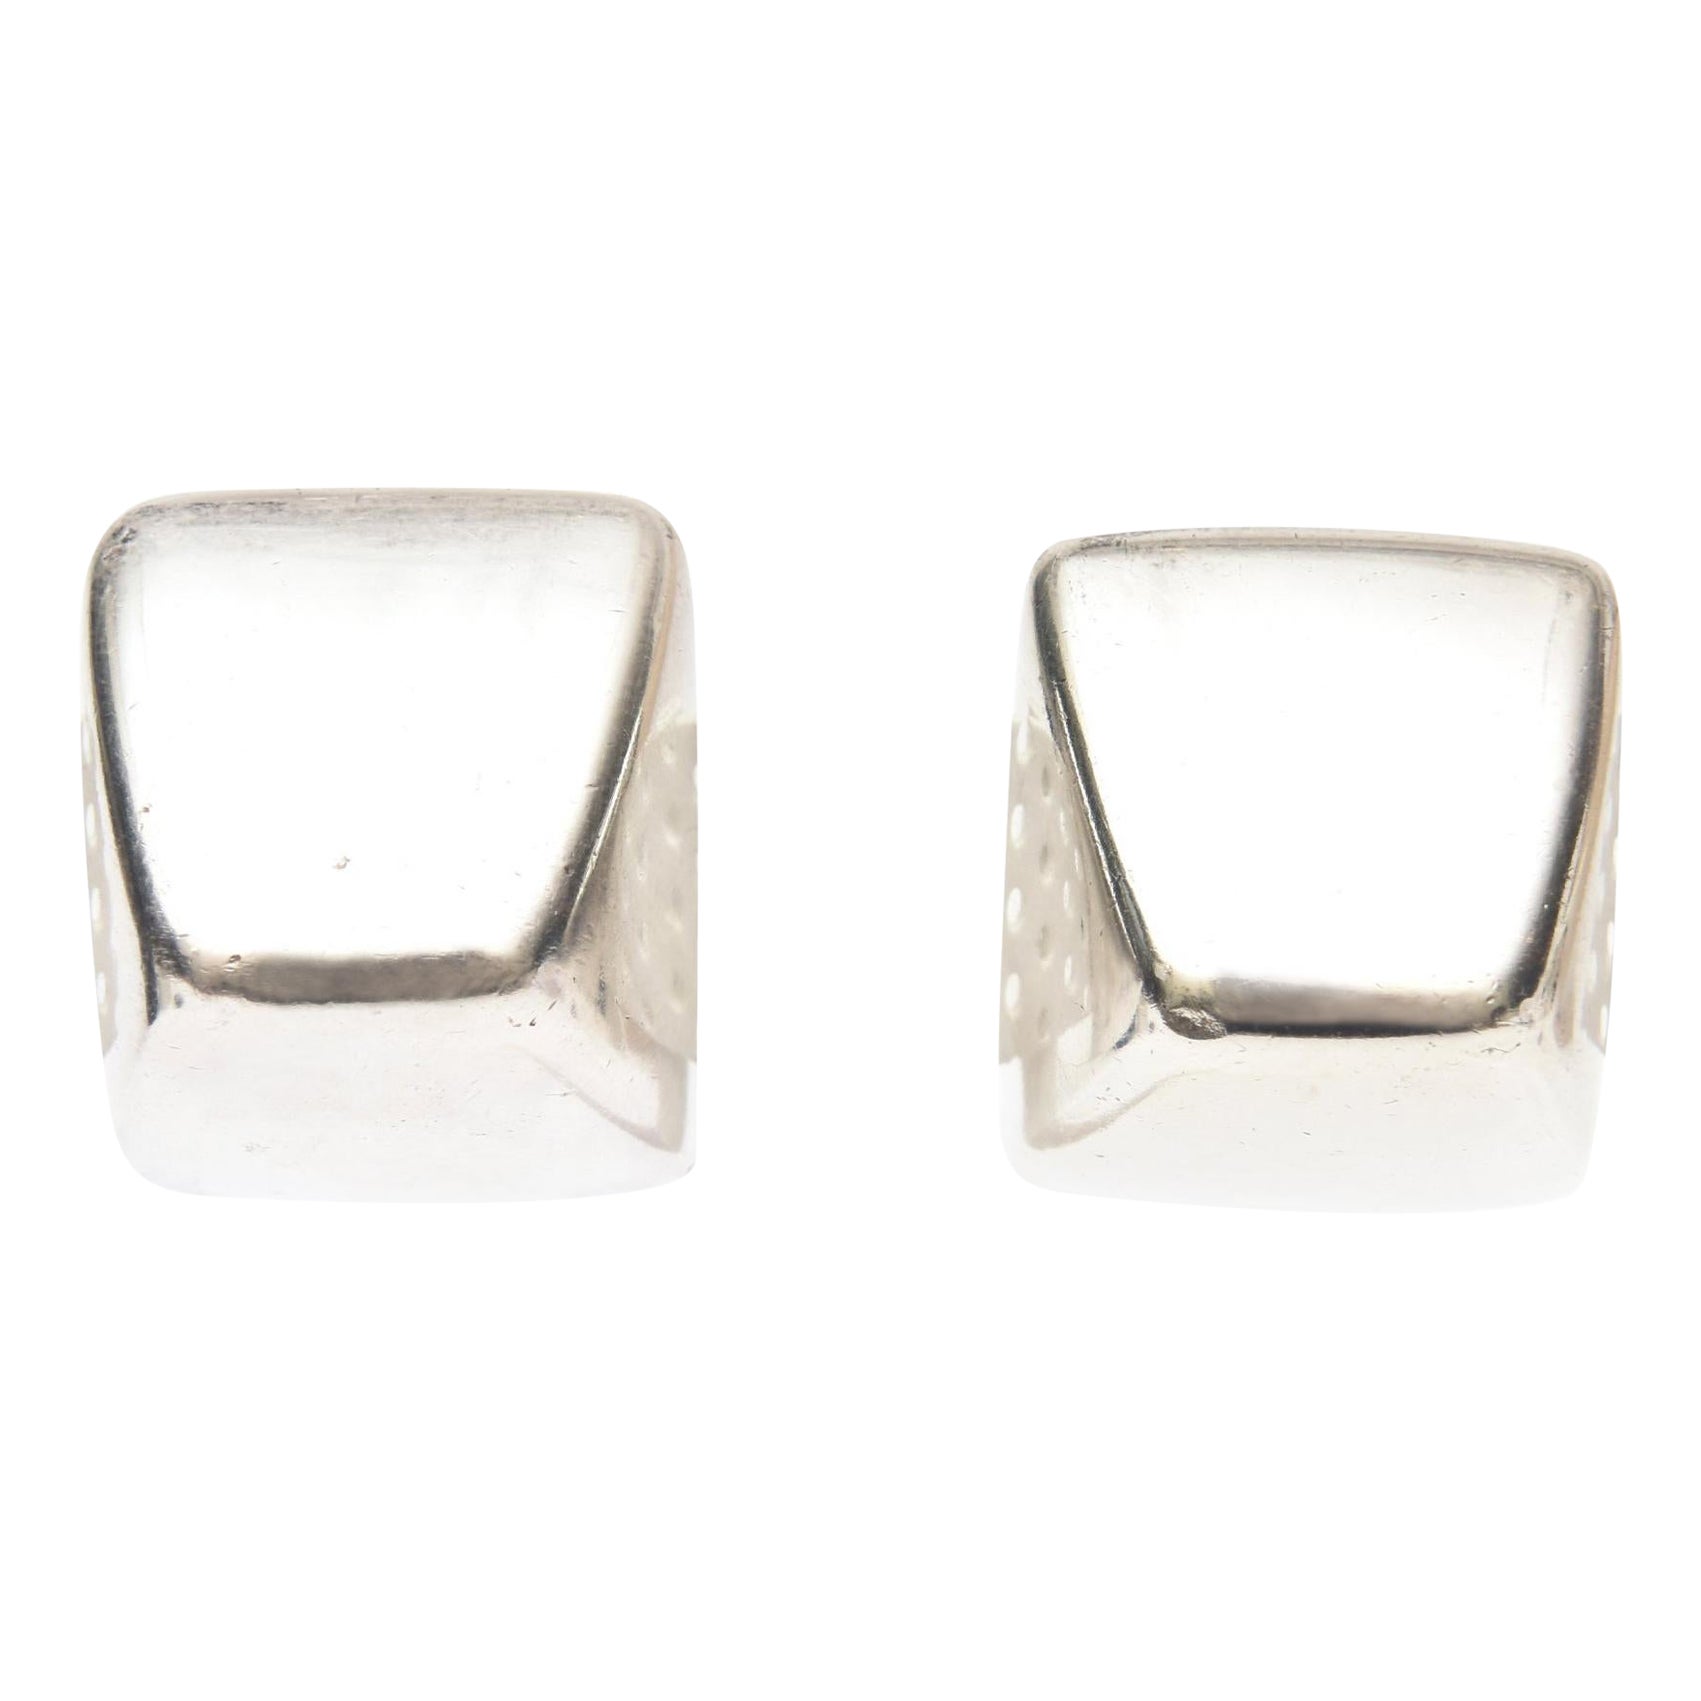 Sterling Silver Sculptural Clip On Earrings Pair Of